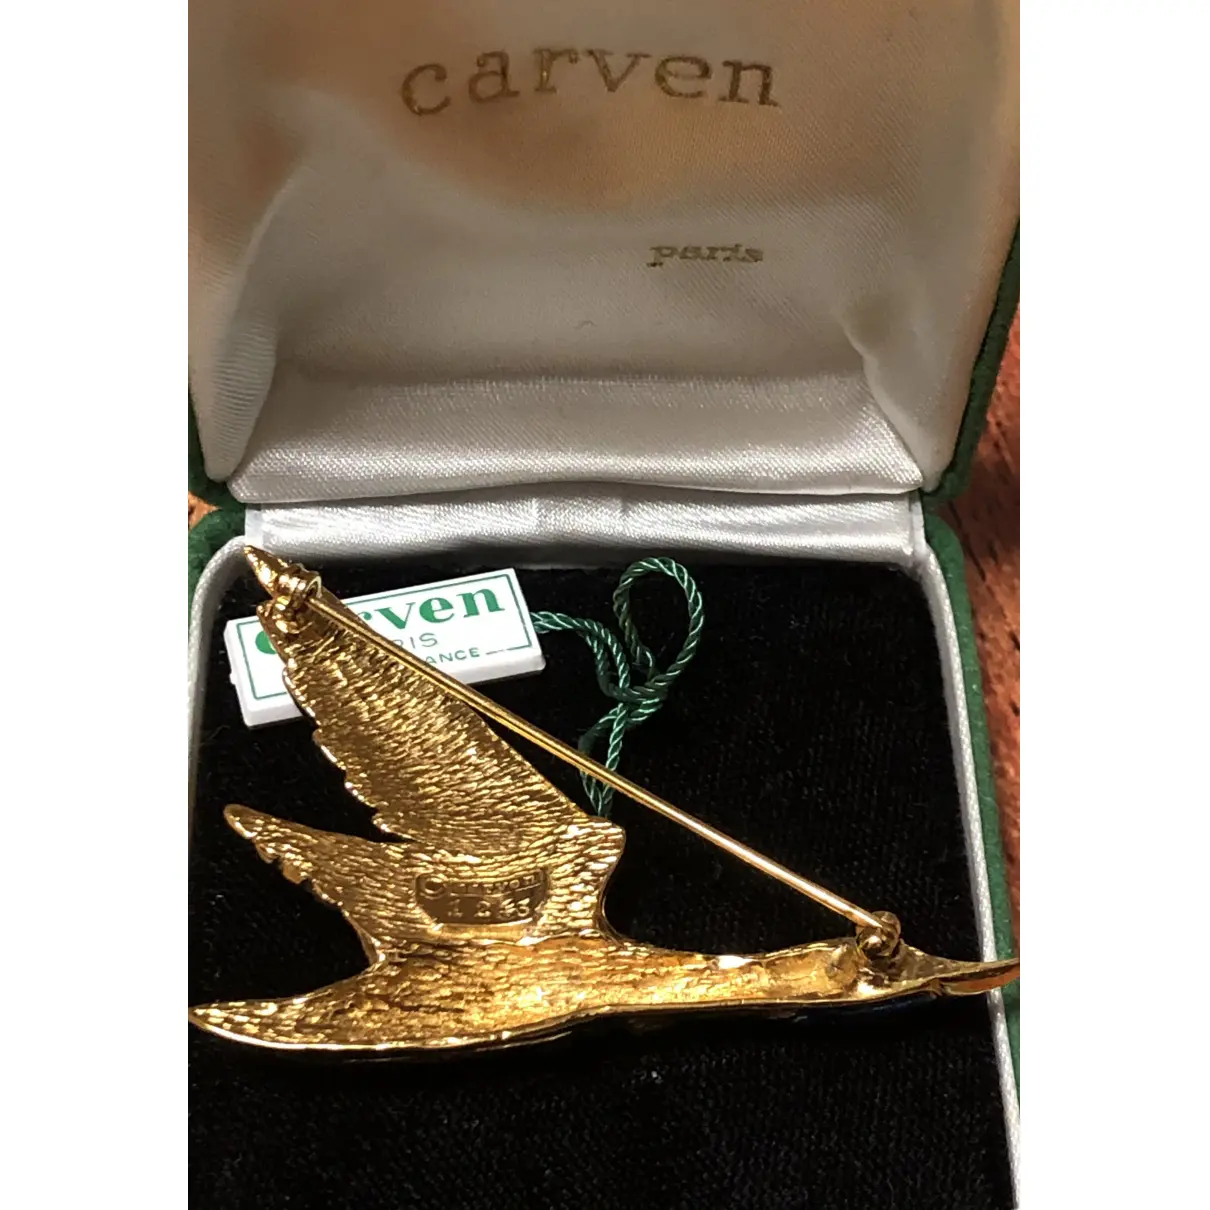 Buy Carven Pin & brooche online